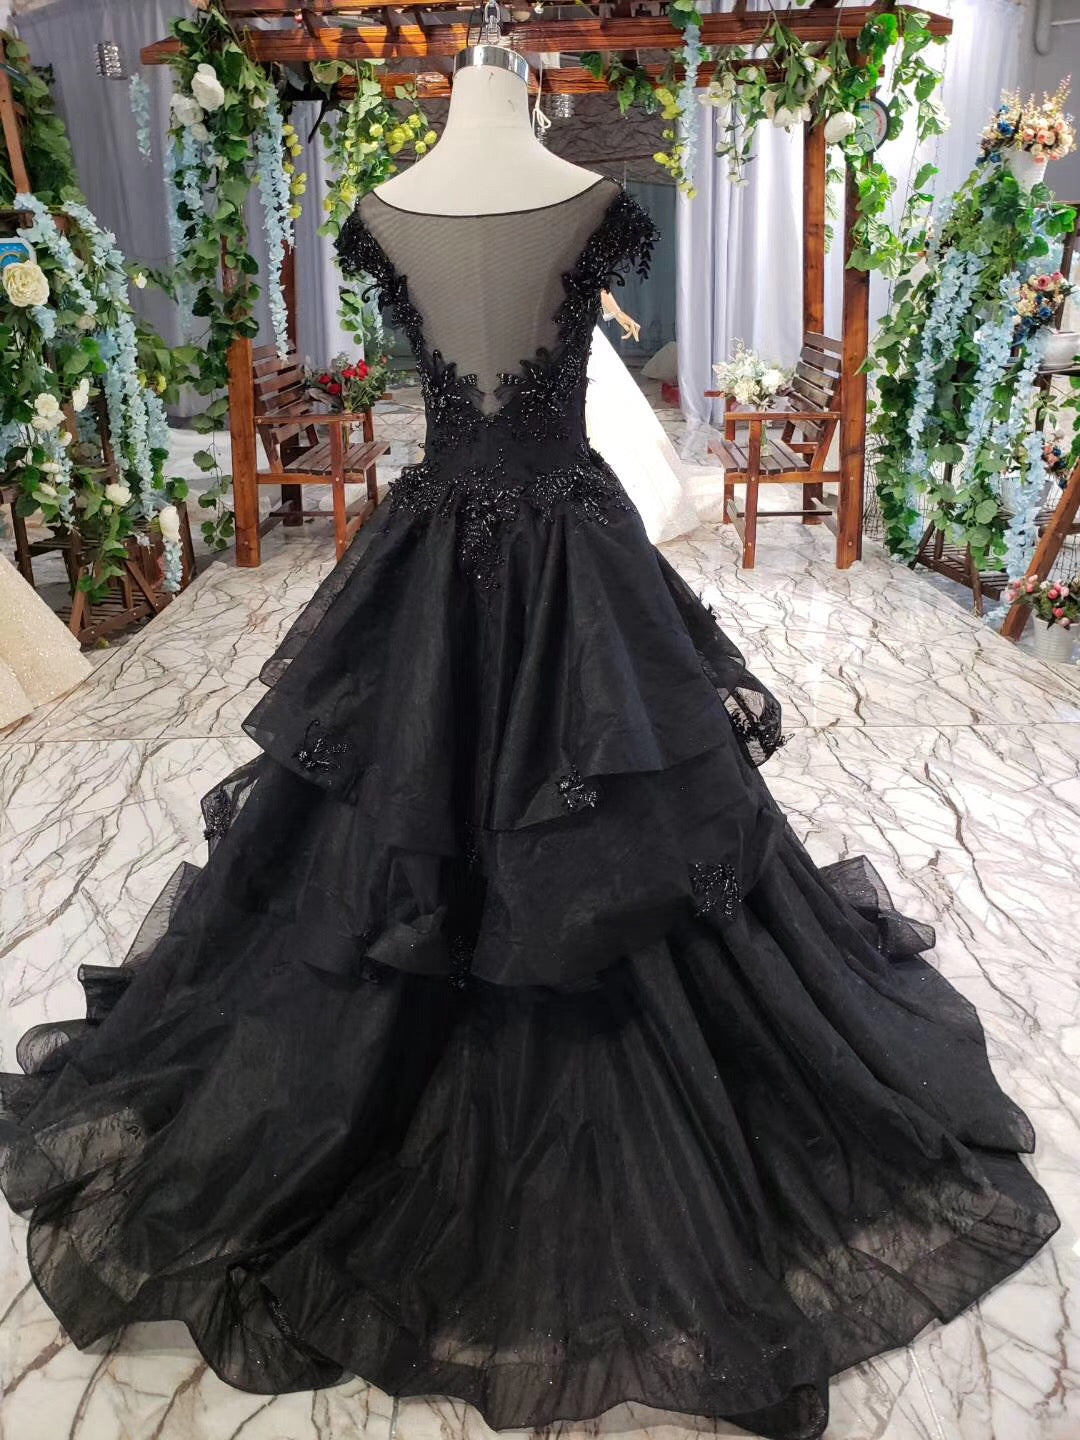 Elegant Sheer Scoop Long Prom Dress Beaded Black Pageant Evening Dress OP902